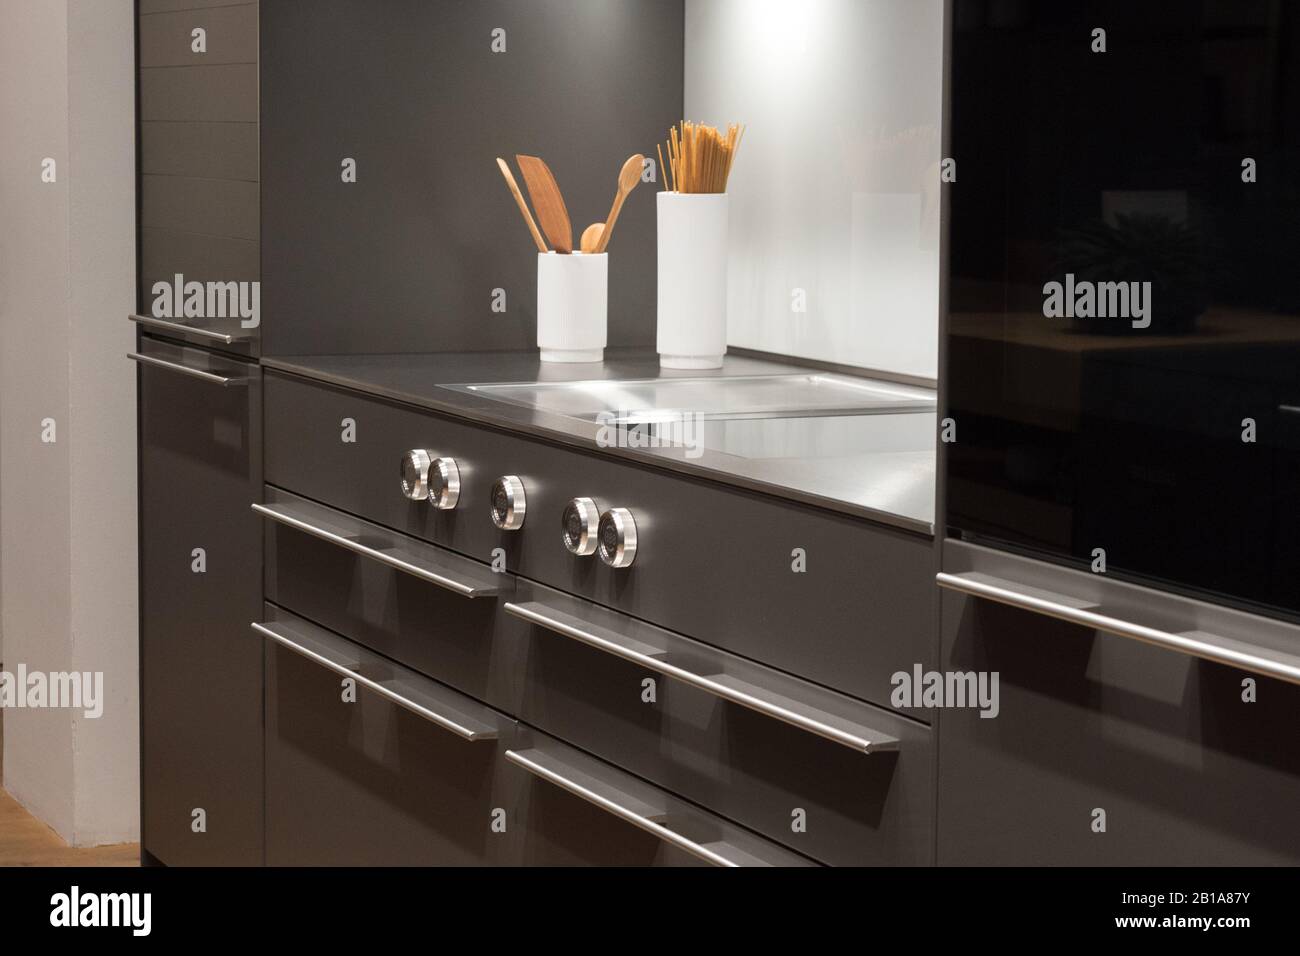 Sleek Modern Kitchen with dark surfaces, white utensils and digital display control dials Stock Photo